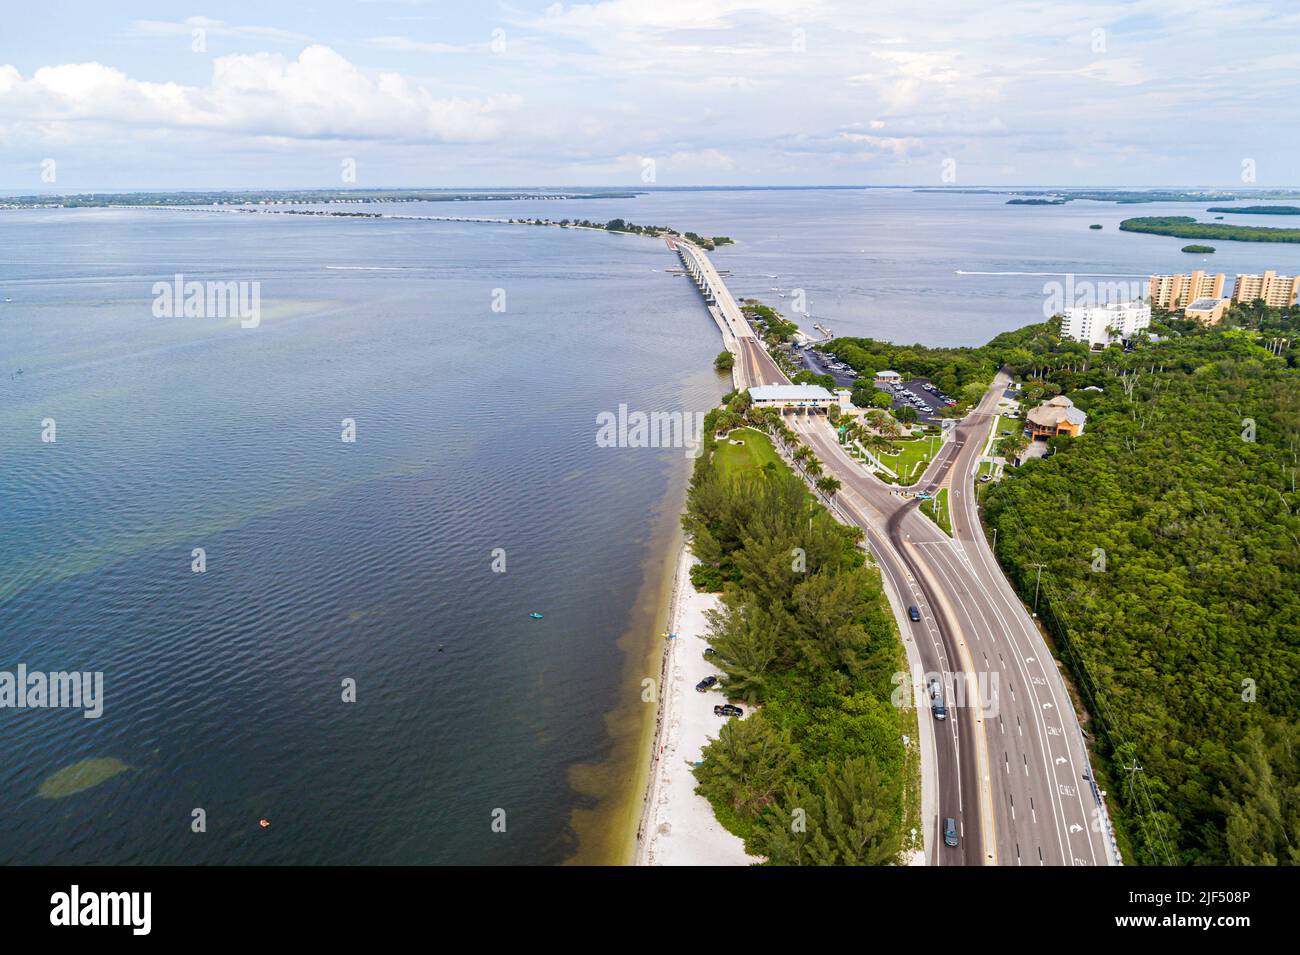 Fort Ft. Myers Florida, McGregor Boulevard Sanibel Island Causeway, puerta de peaje, vista aérea desde arriba, paisaje natural Foto de stock